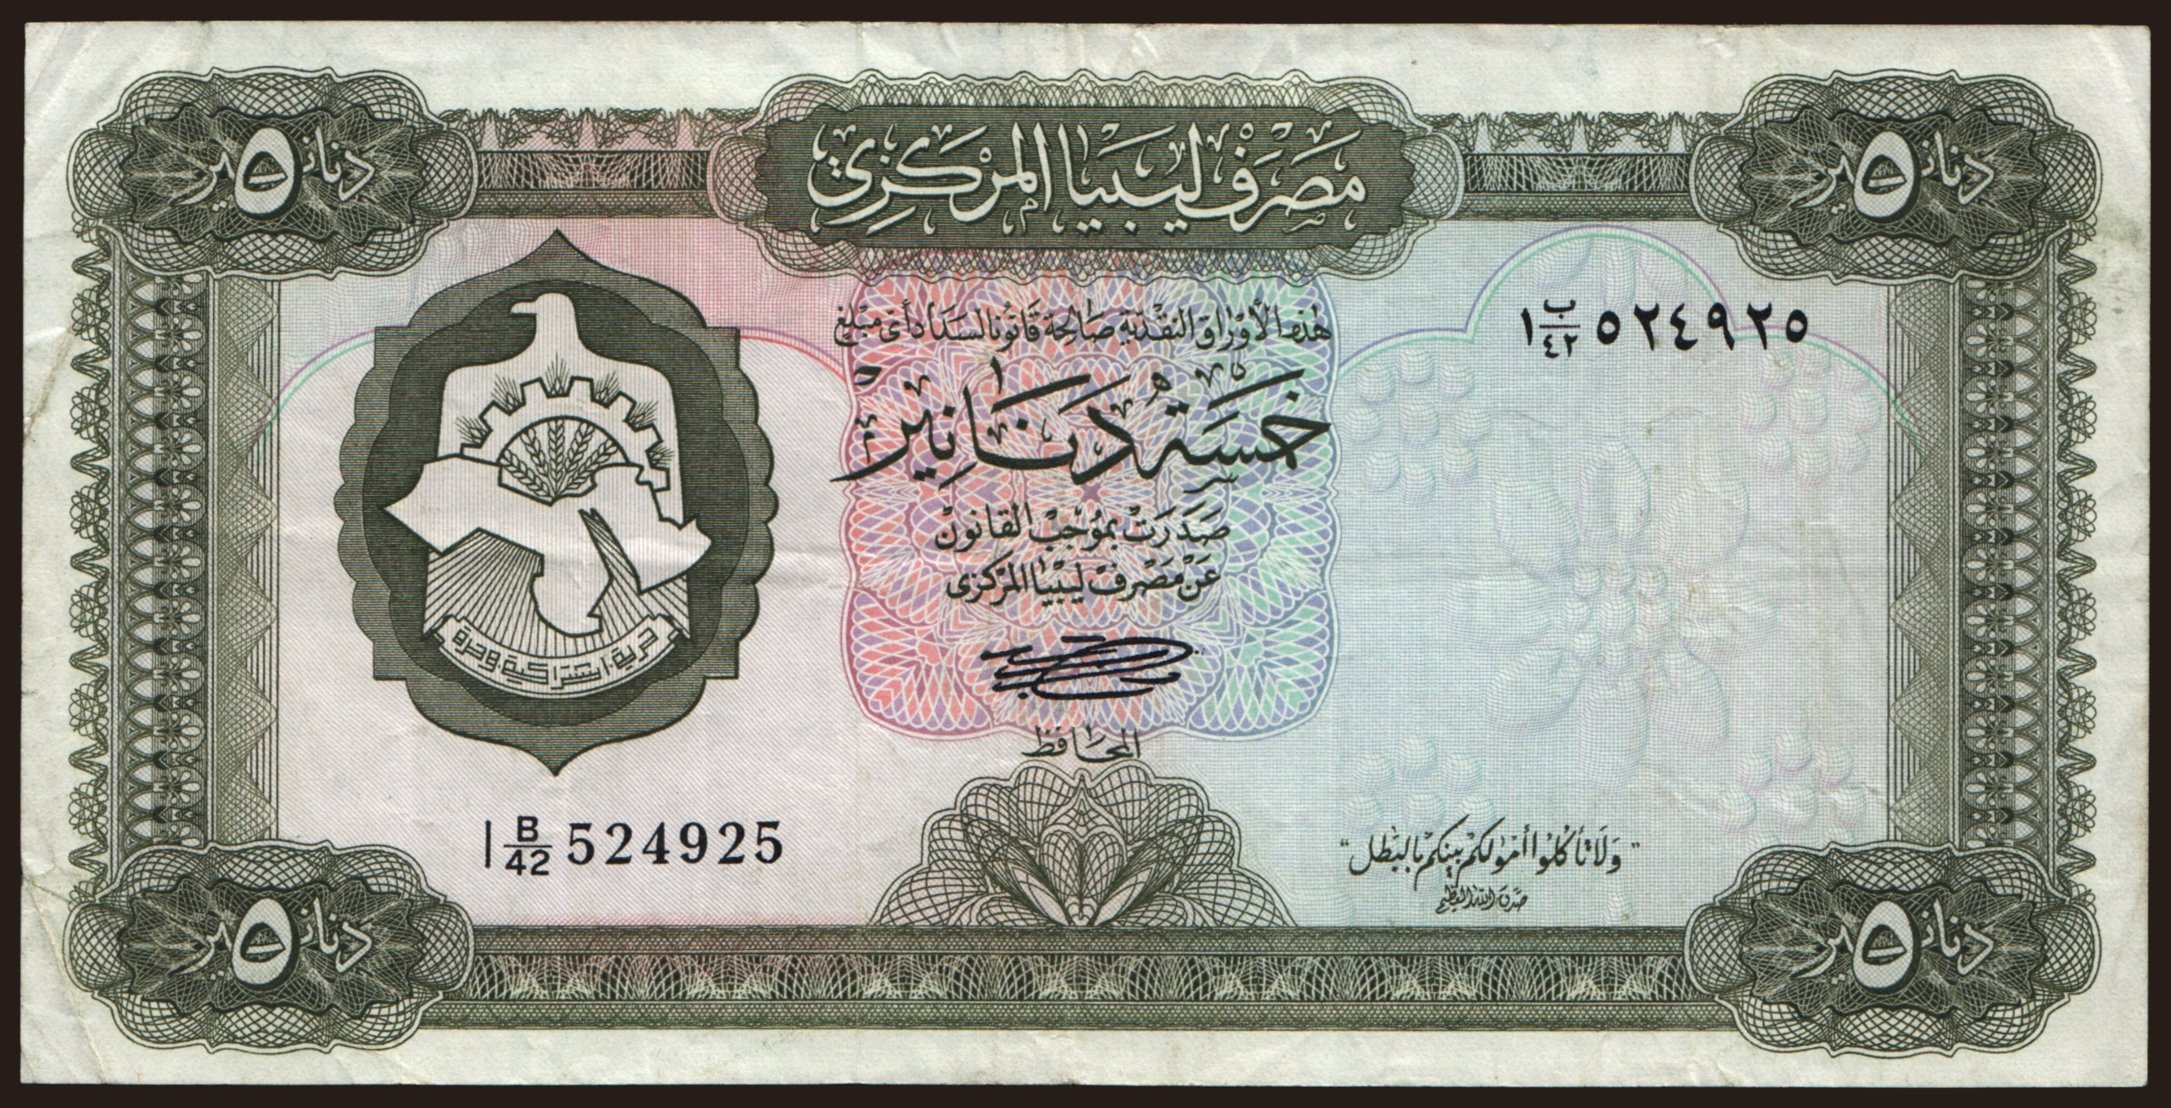 5 dinars, 1972